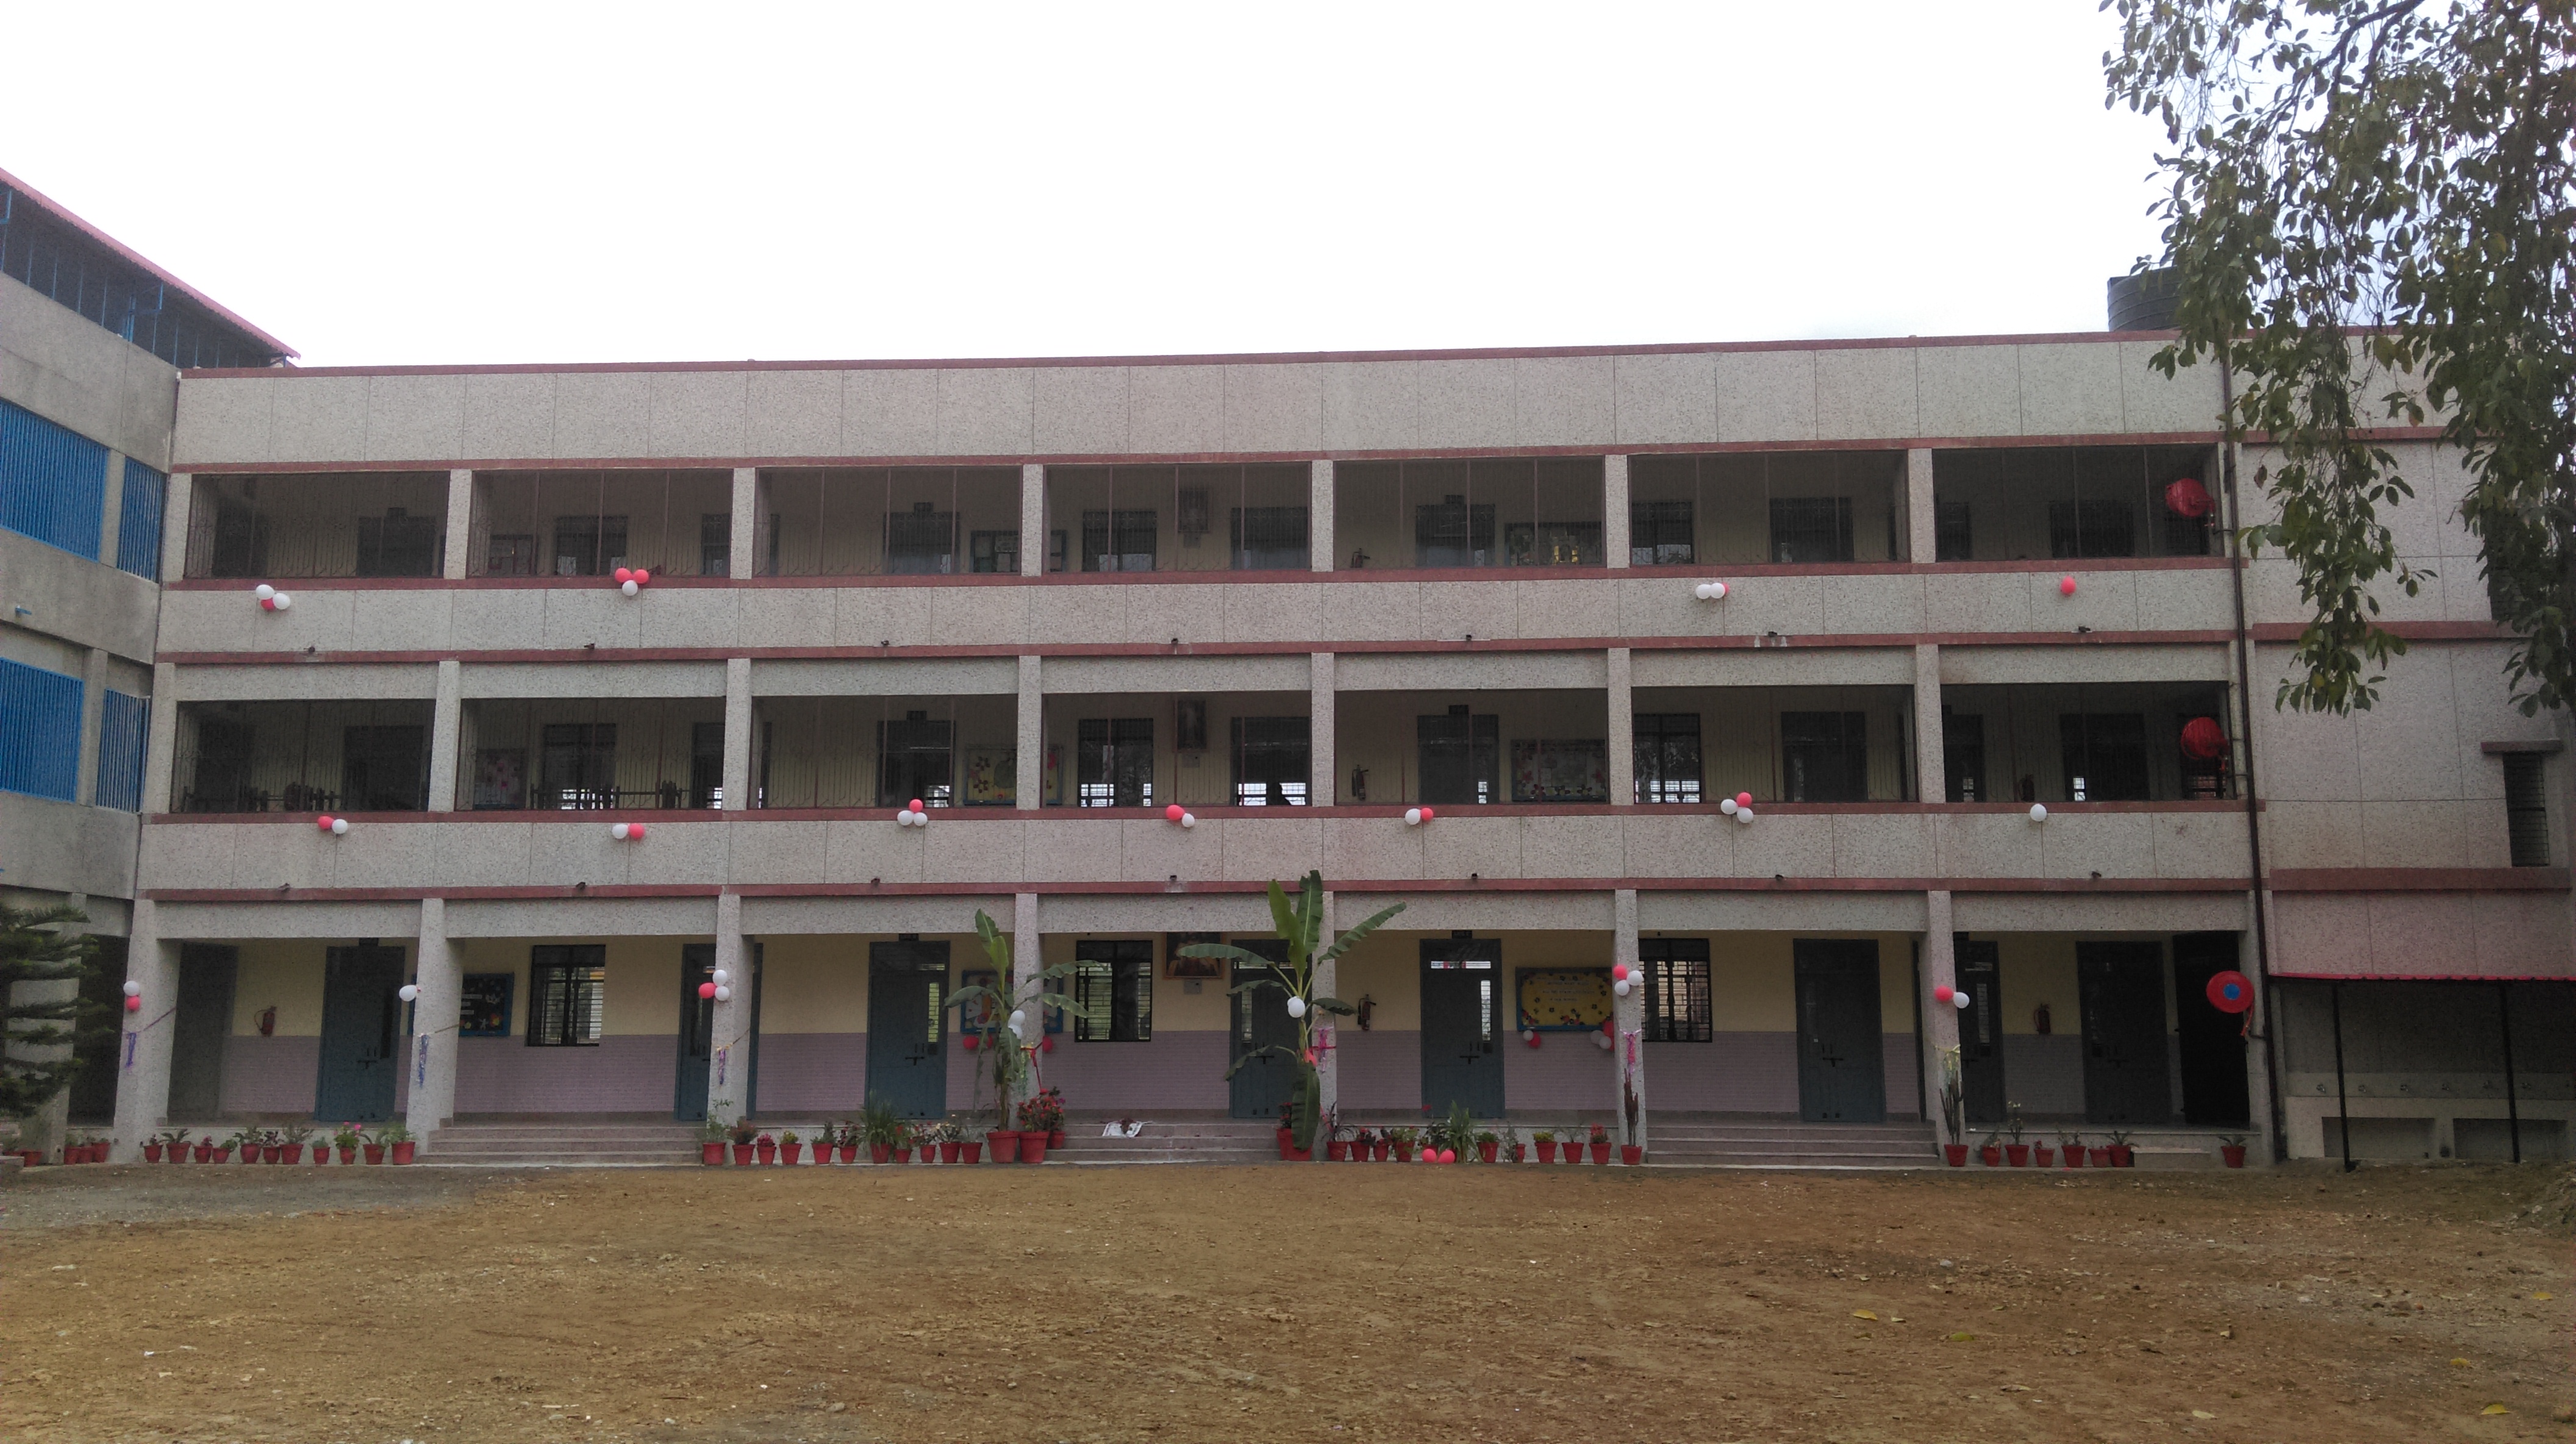 St, Marys School at Dehradun, Uttarakhand